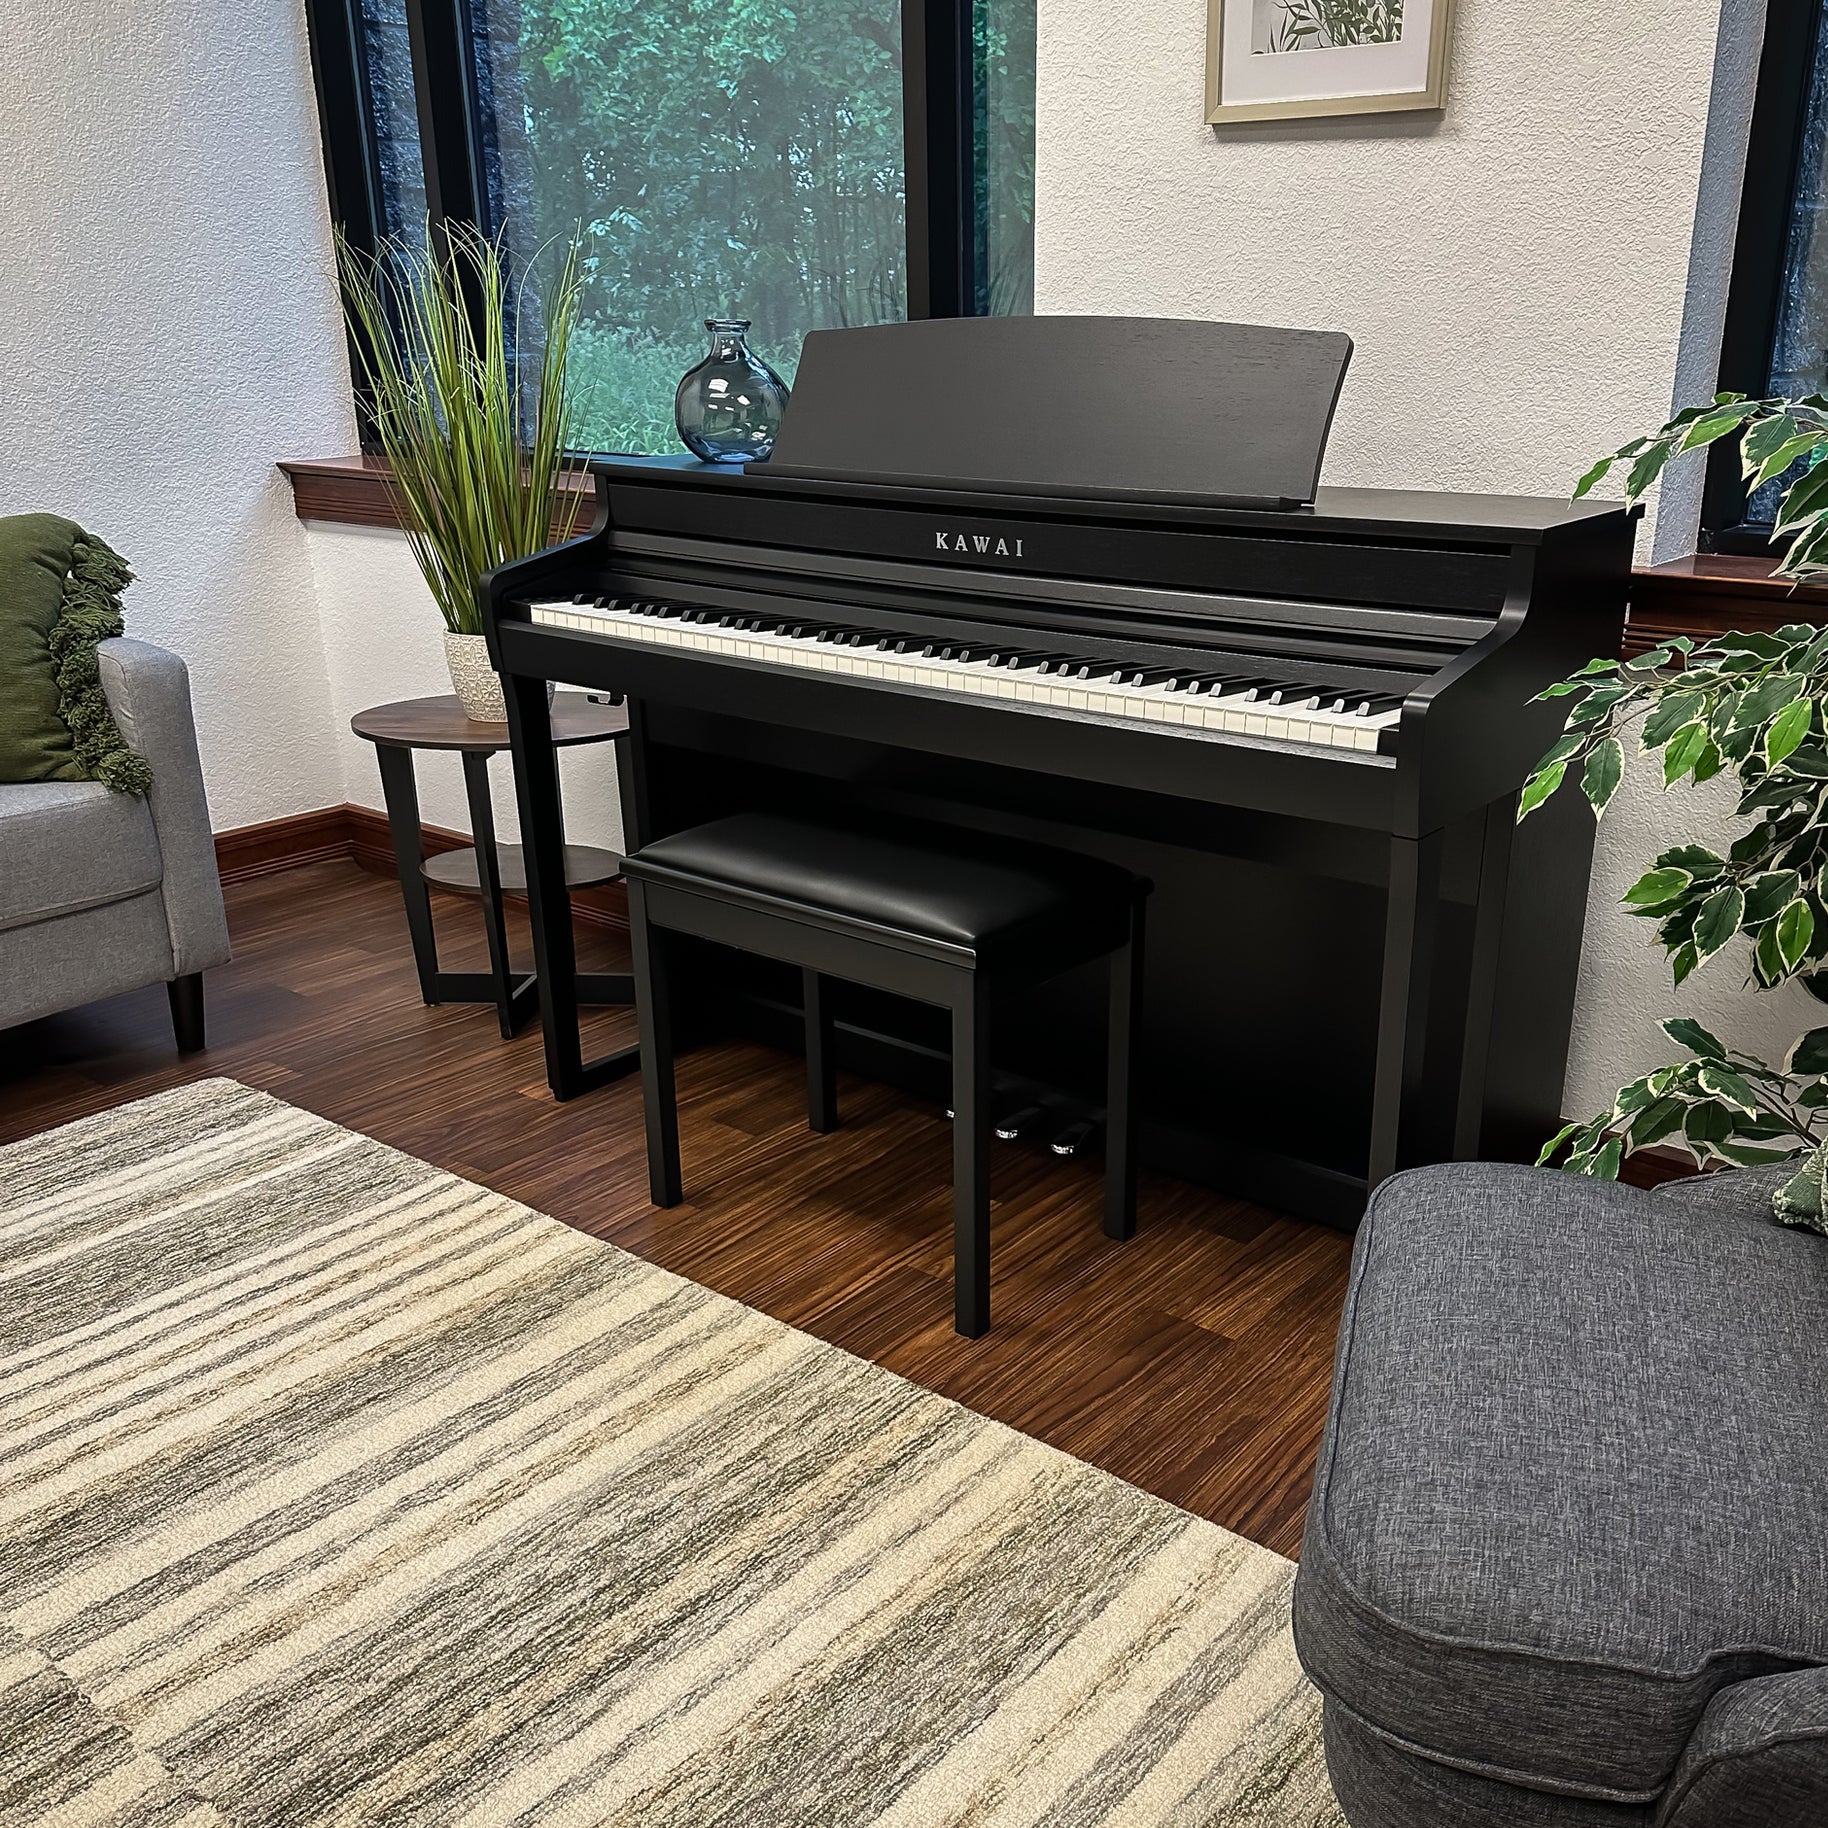 Kawai CA401 Concert Artist Digital Piano - Satin Black - Left angle in a stylish living room